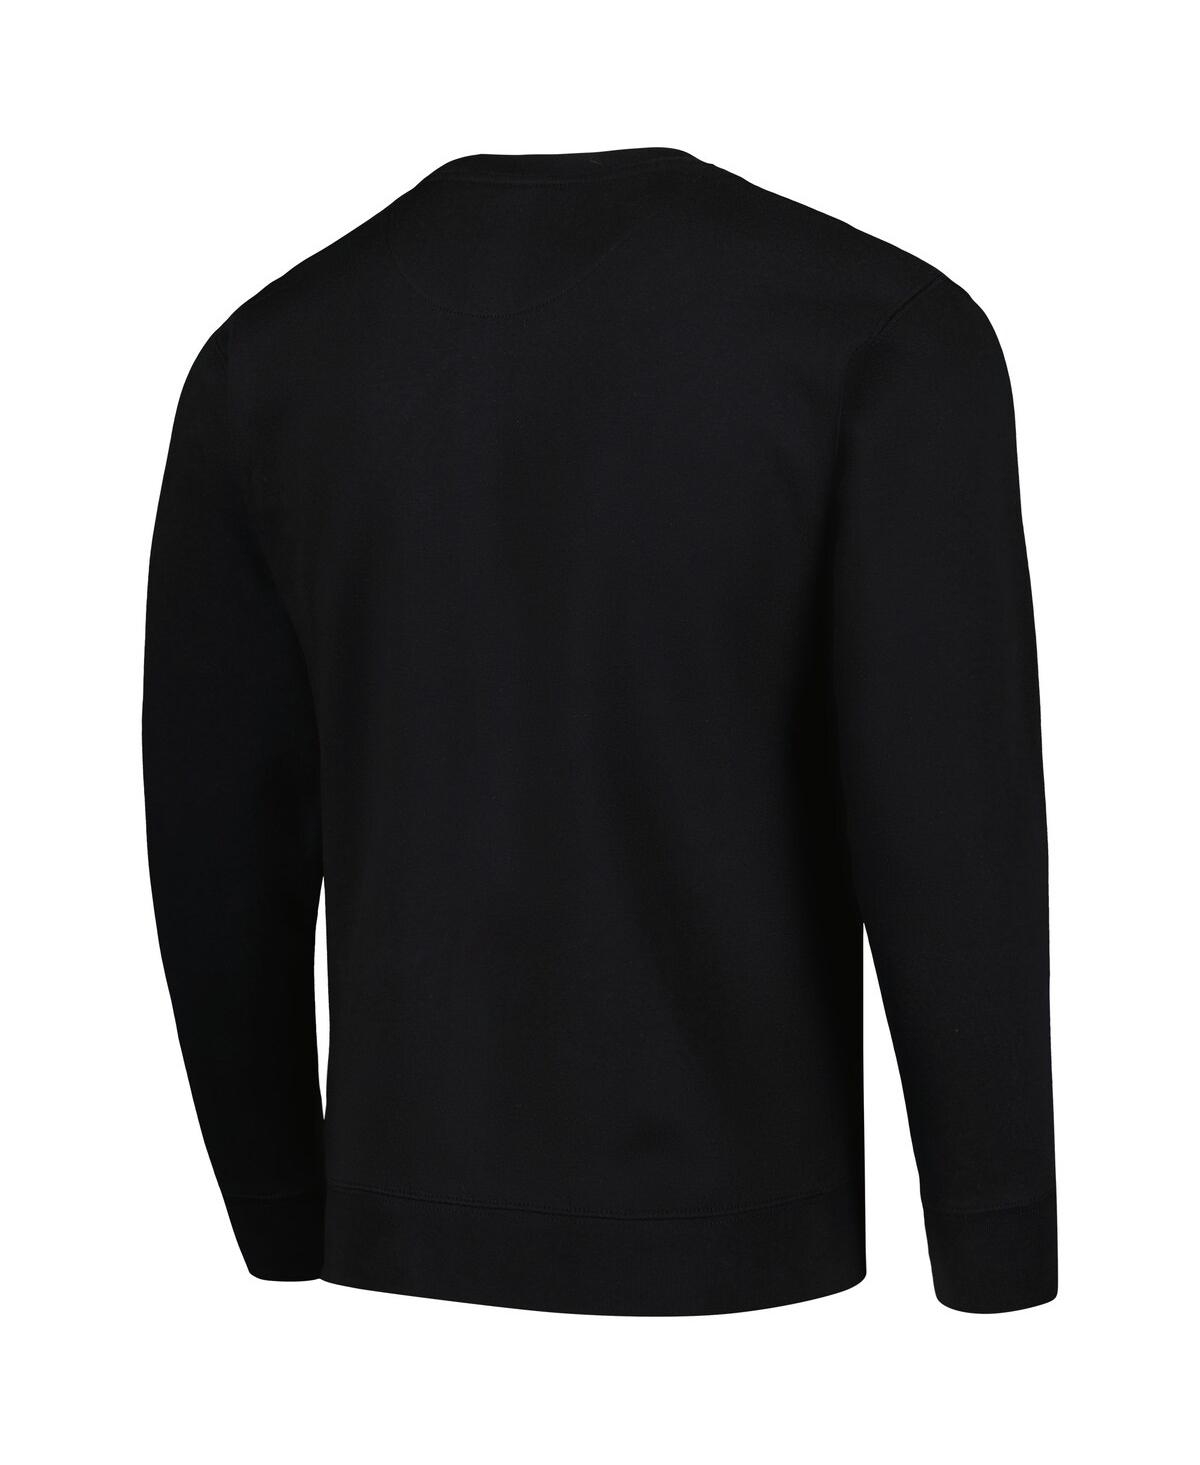 Shop American Classics Men's Black The Real Ghostbusters Logo Pullover Sweatshirt